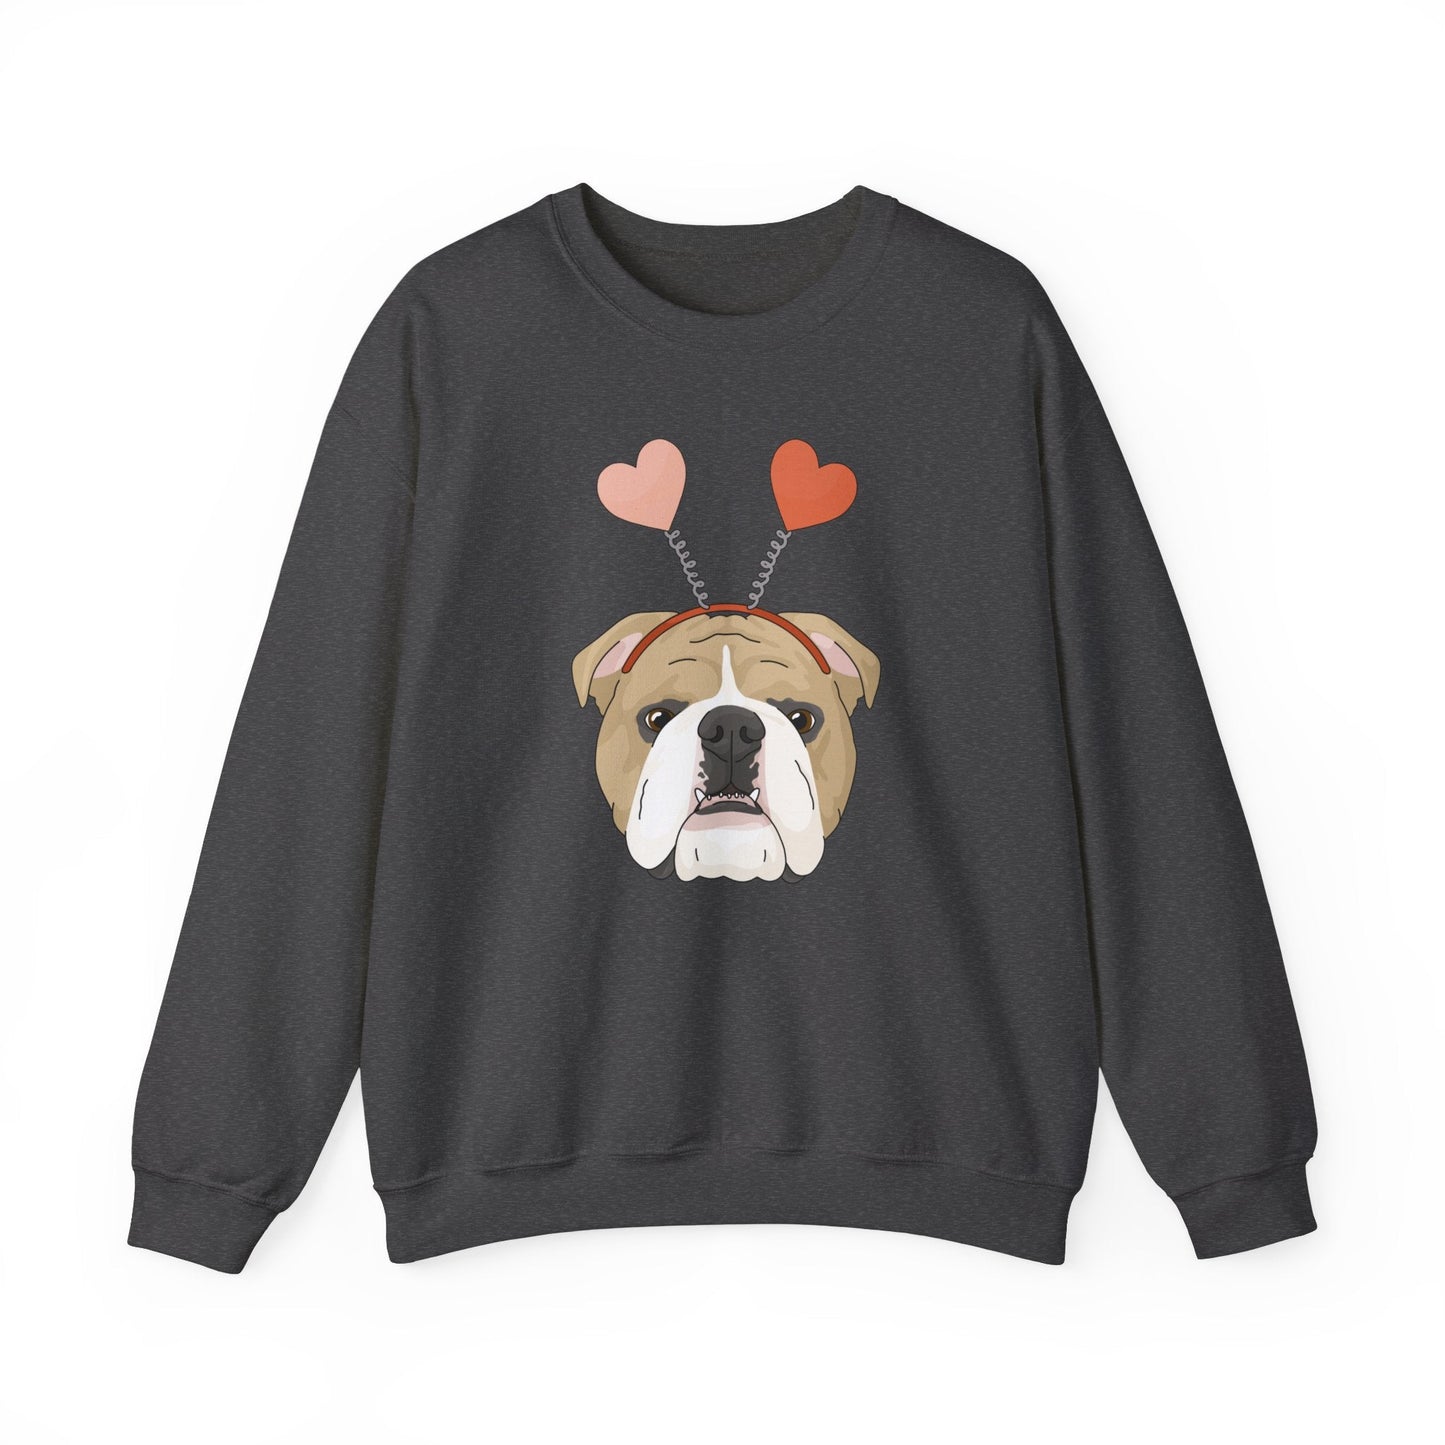 A Very Bulldog Valentine | Crewneck Sweatshirt - Detezi Designs-89033020008289419028